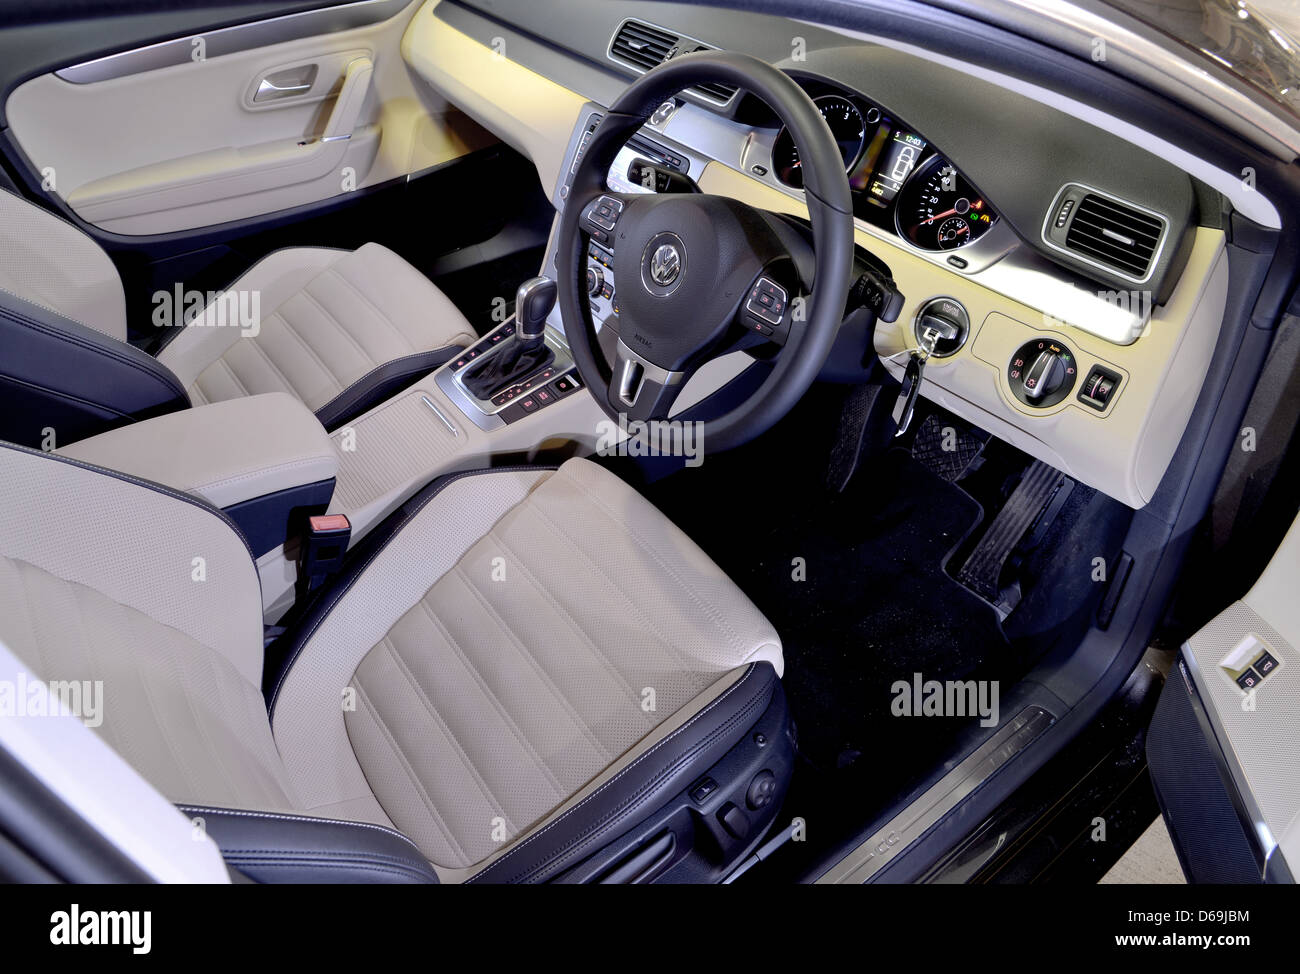 2012 2013 VW Volkswagen Passat CC interior Stock Photo - Alamy